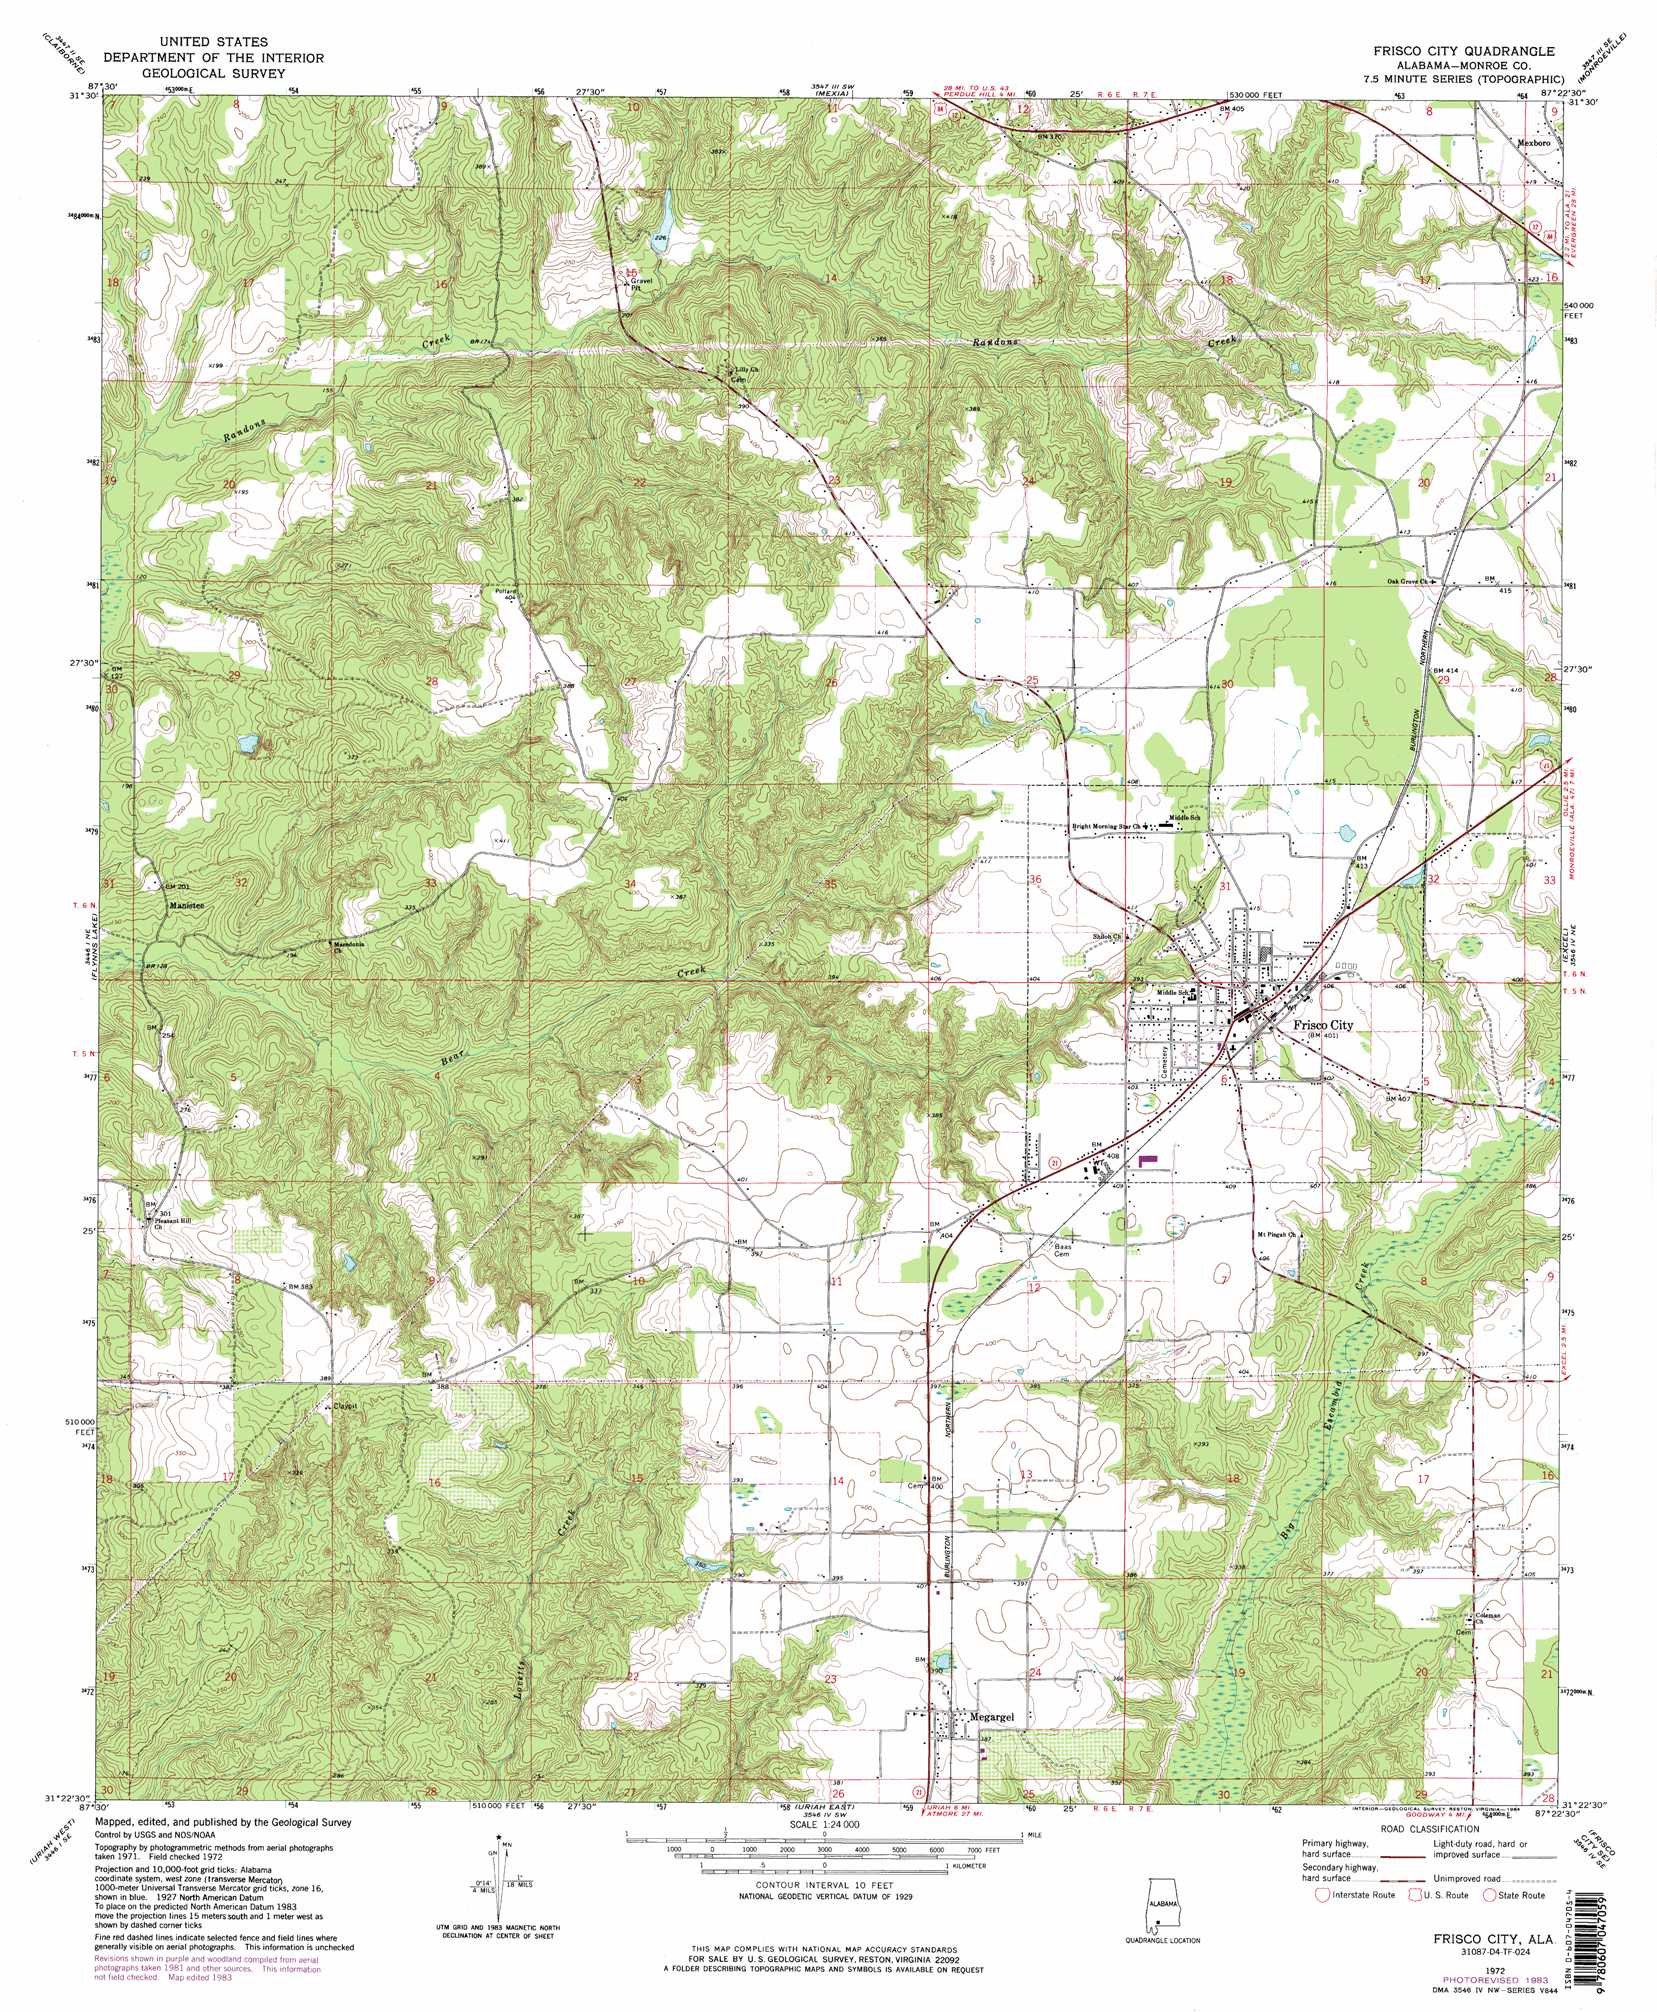 Frisco City topographic map, AL - USGS Topo Quad 31087d4